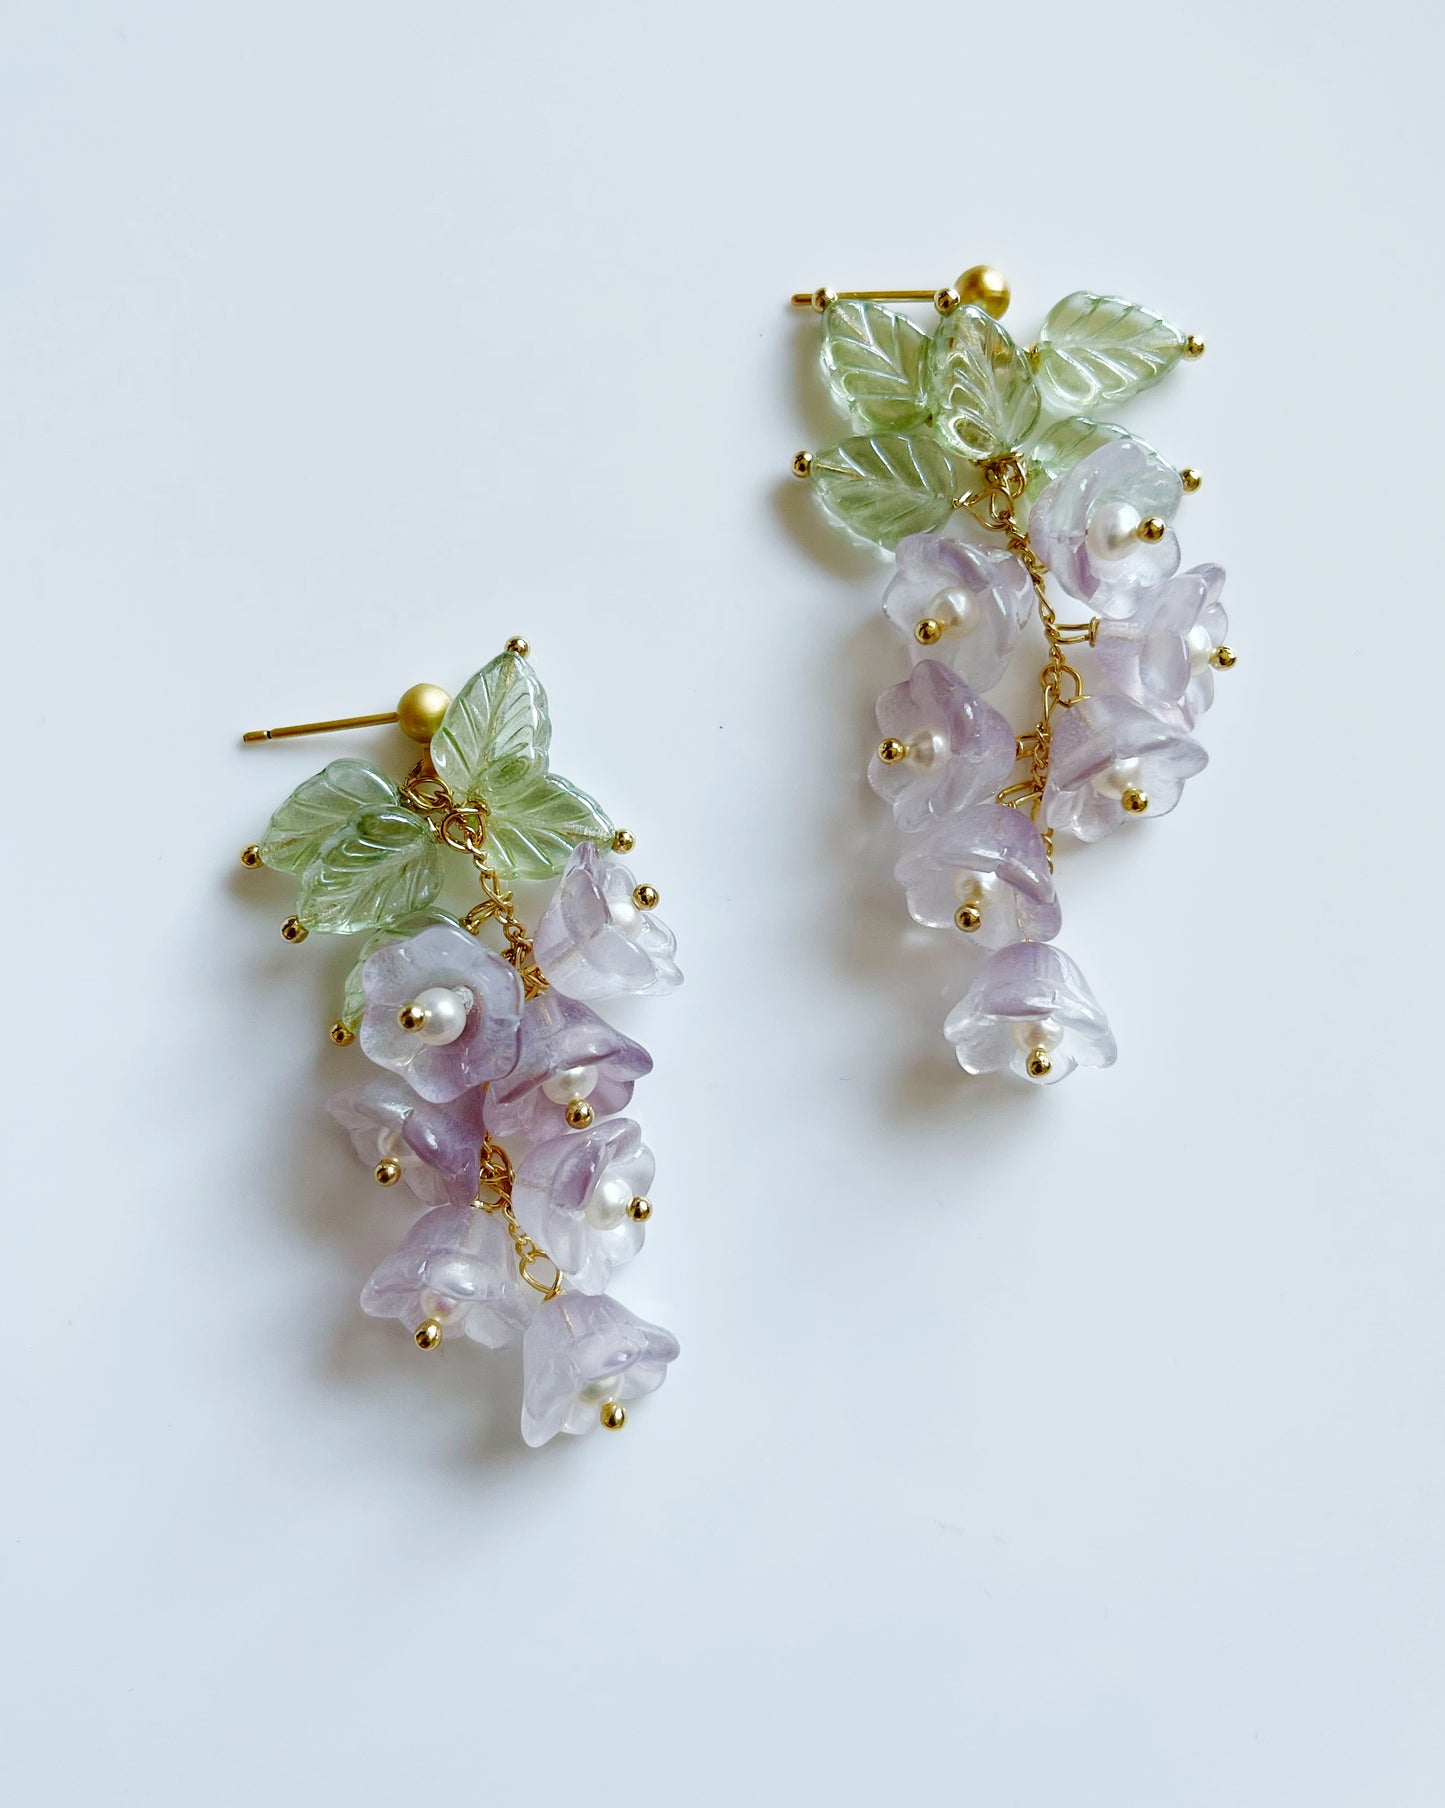 Canterbury bell flowers earrings in purple